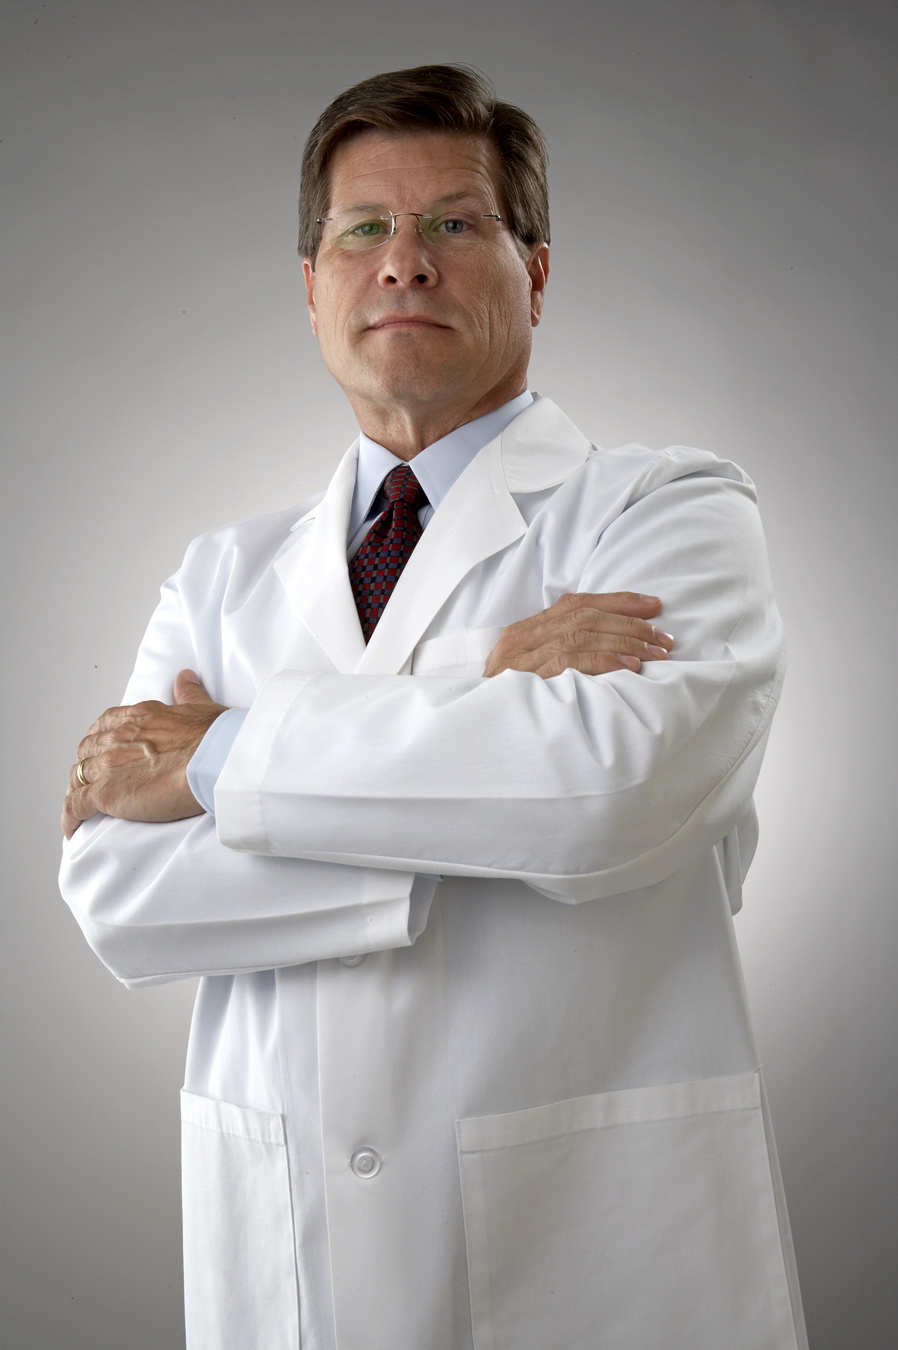 Dr. Thurman